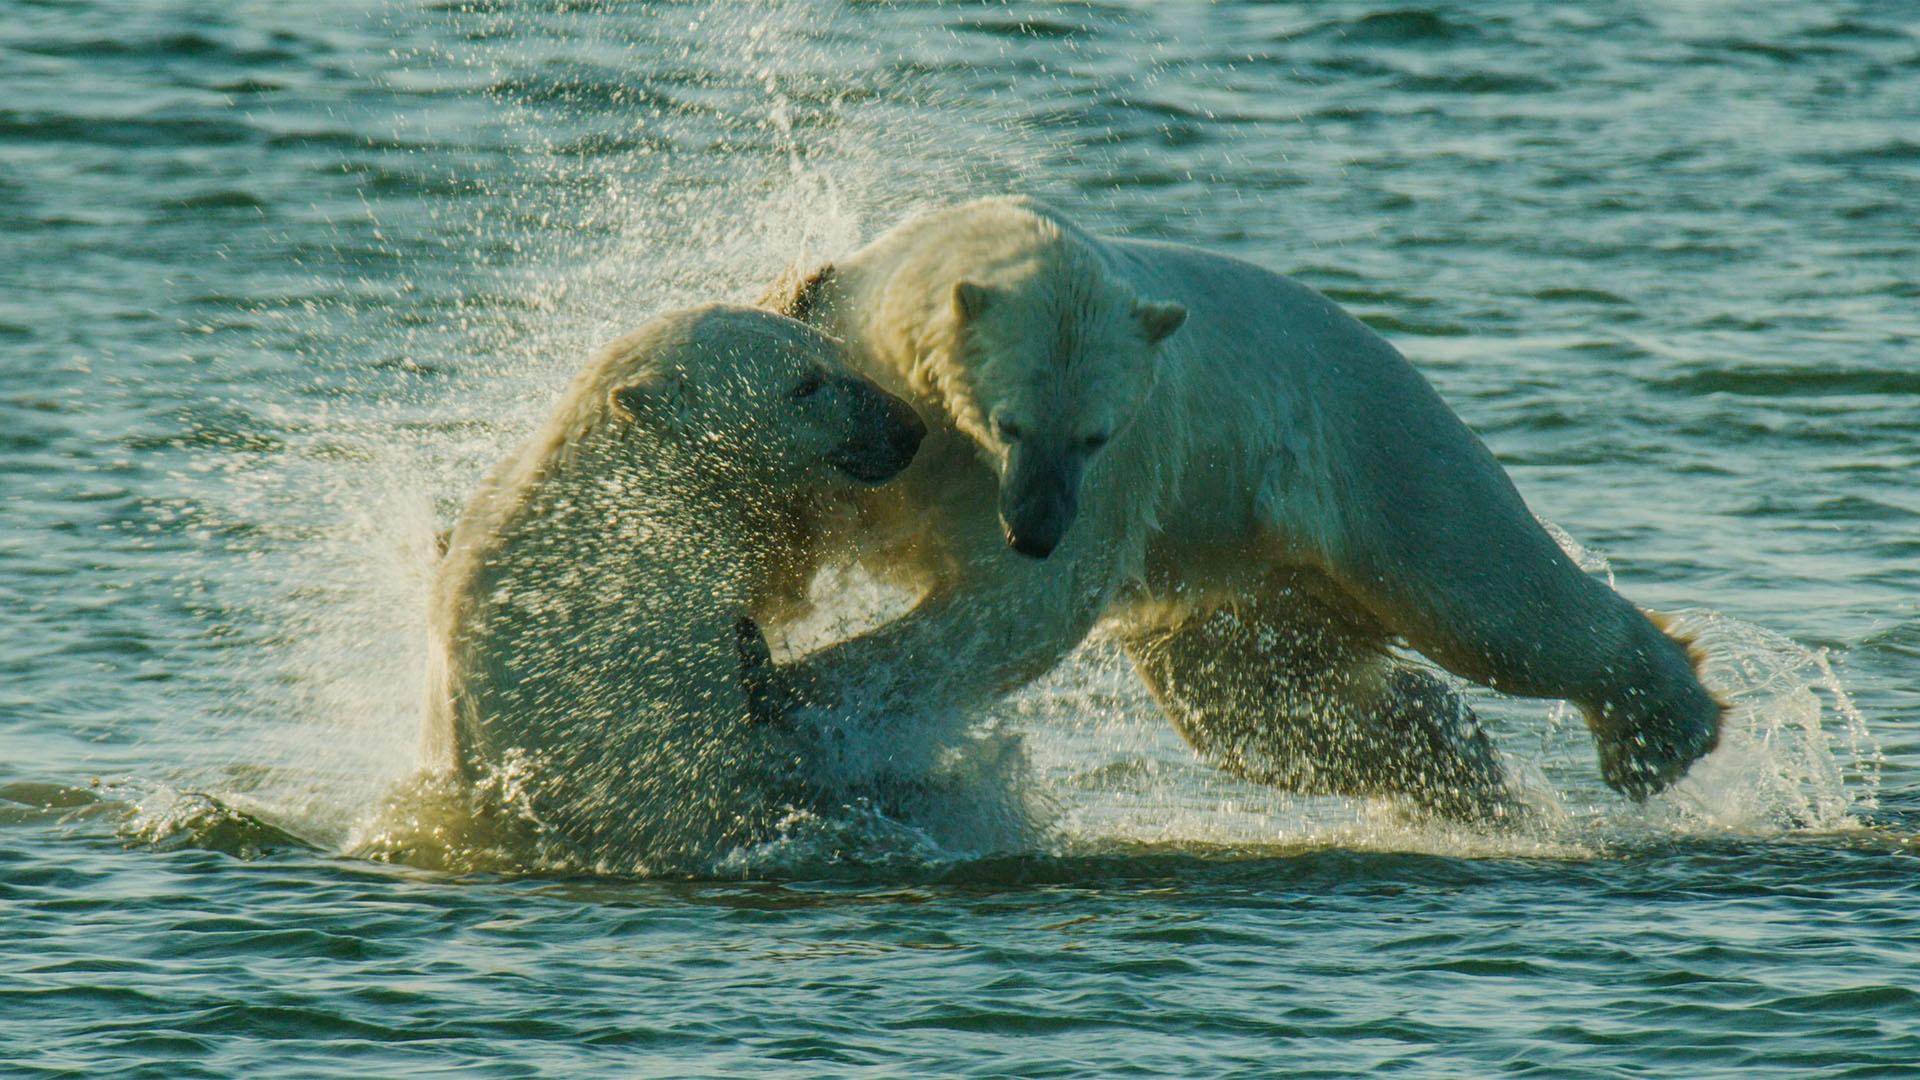 Two polar bears clashing in the water.